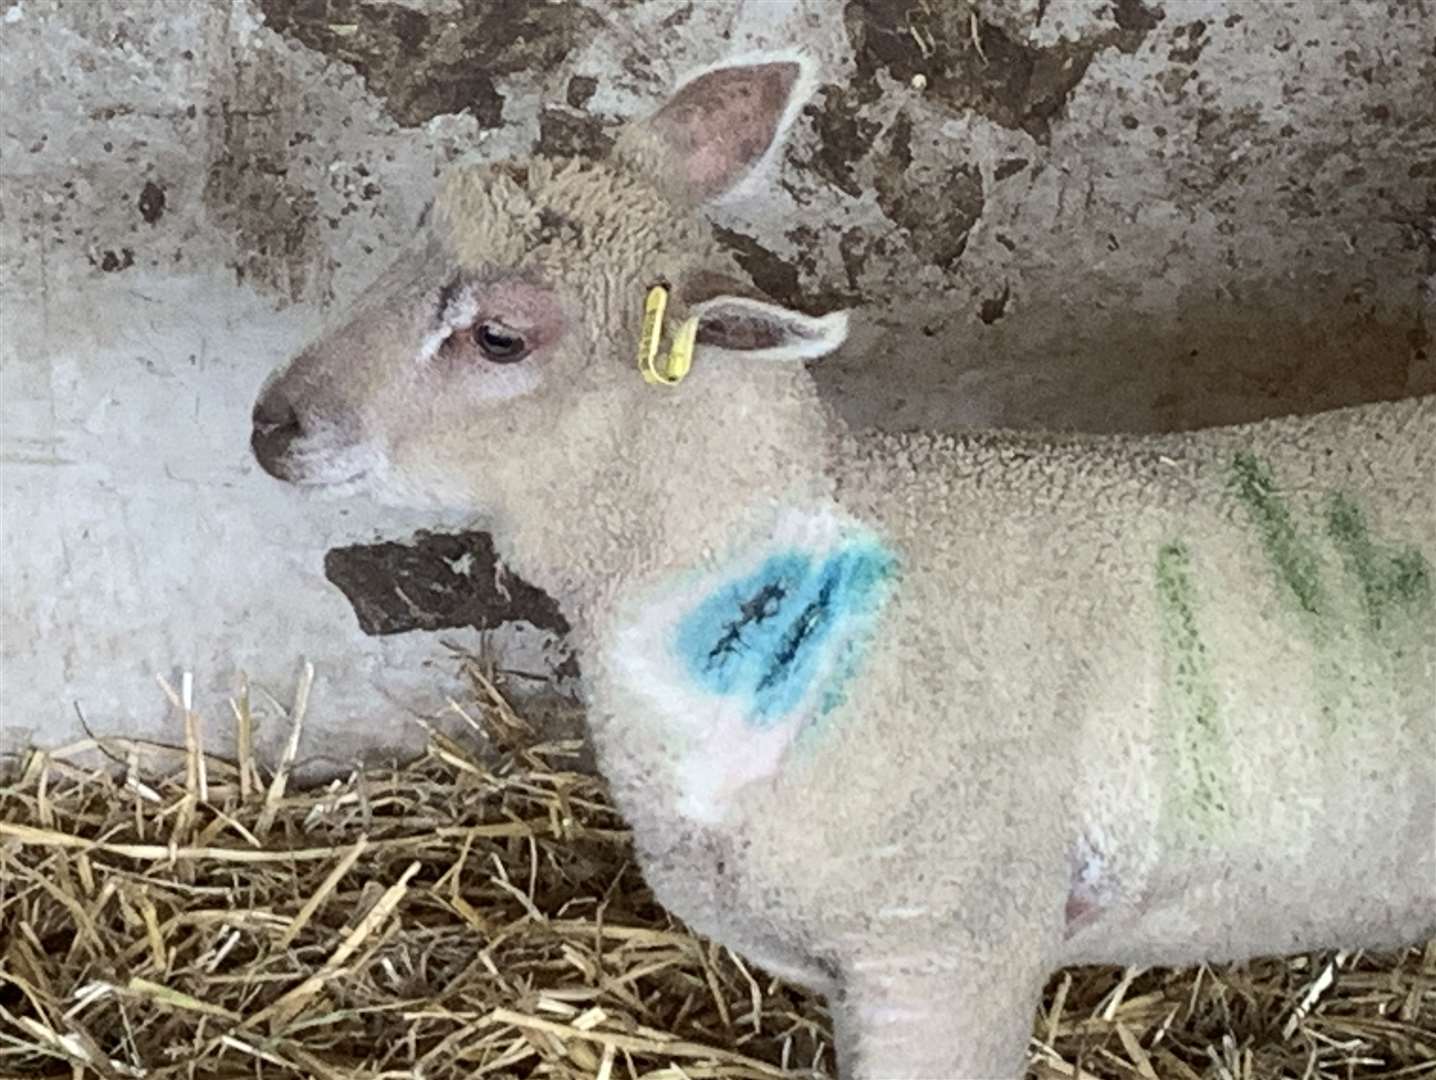 The lambs were mauled around the neck